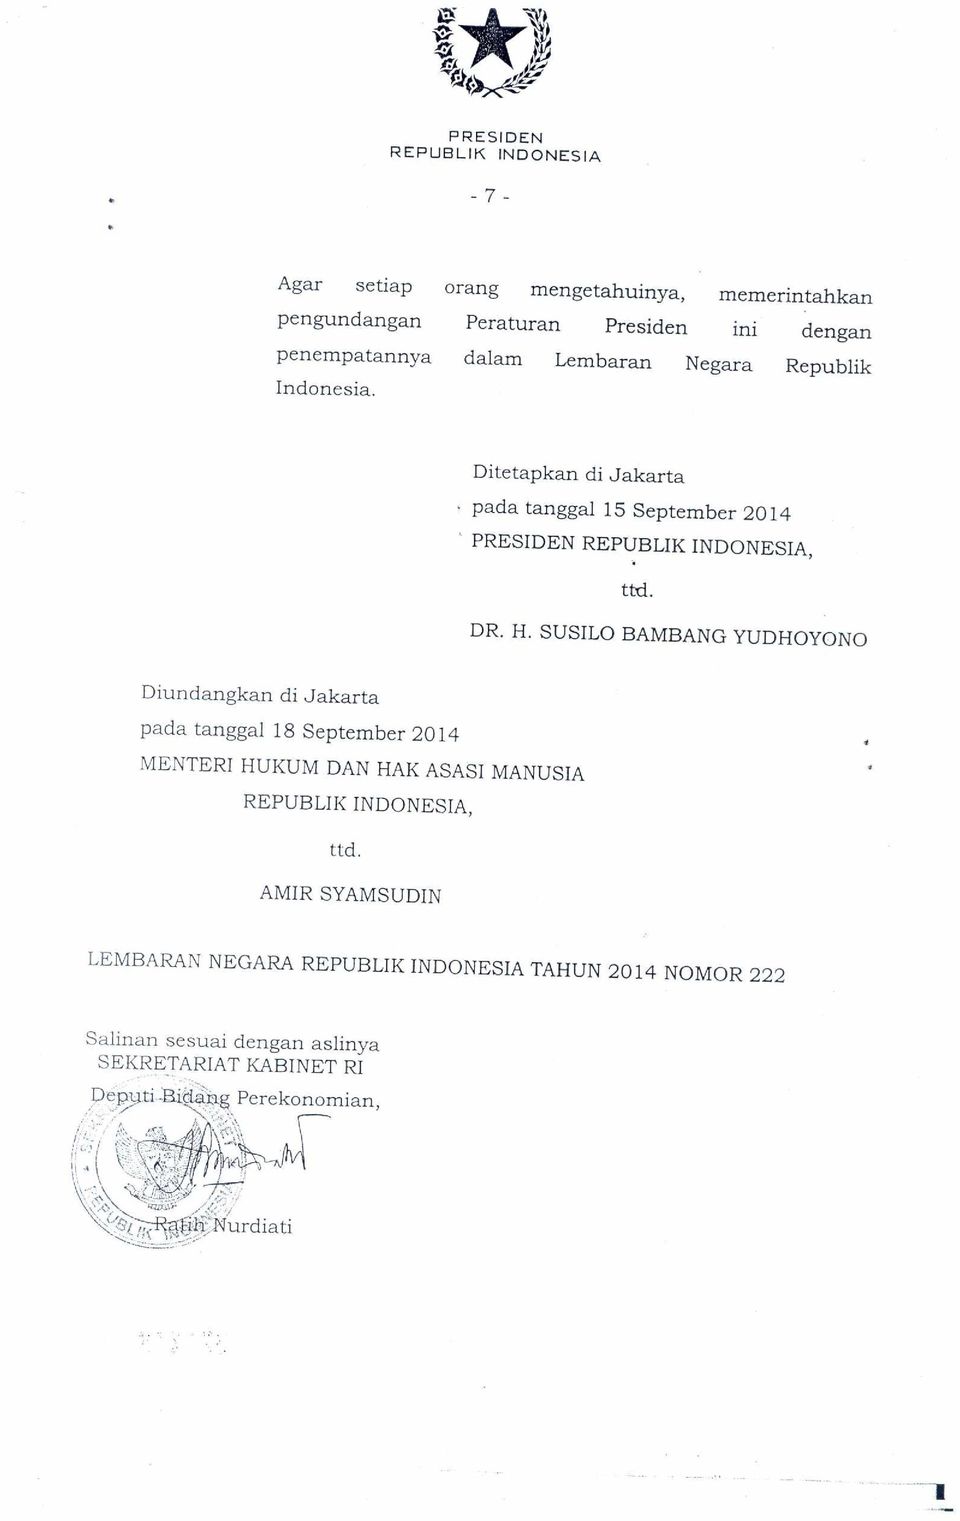 SUSILO BAMBANG YUDHOYONO Diundangkan di Jakarta pada tanggal 18 September 2014 MENTERI HUKUM DAN HAK ASASI MANUSIA, ttd.